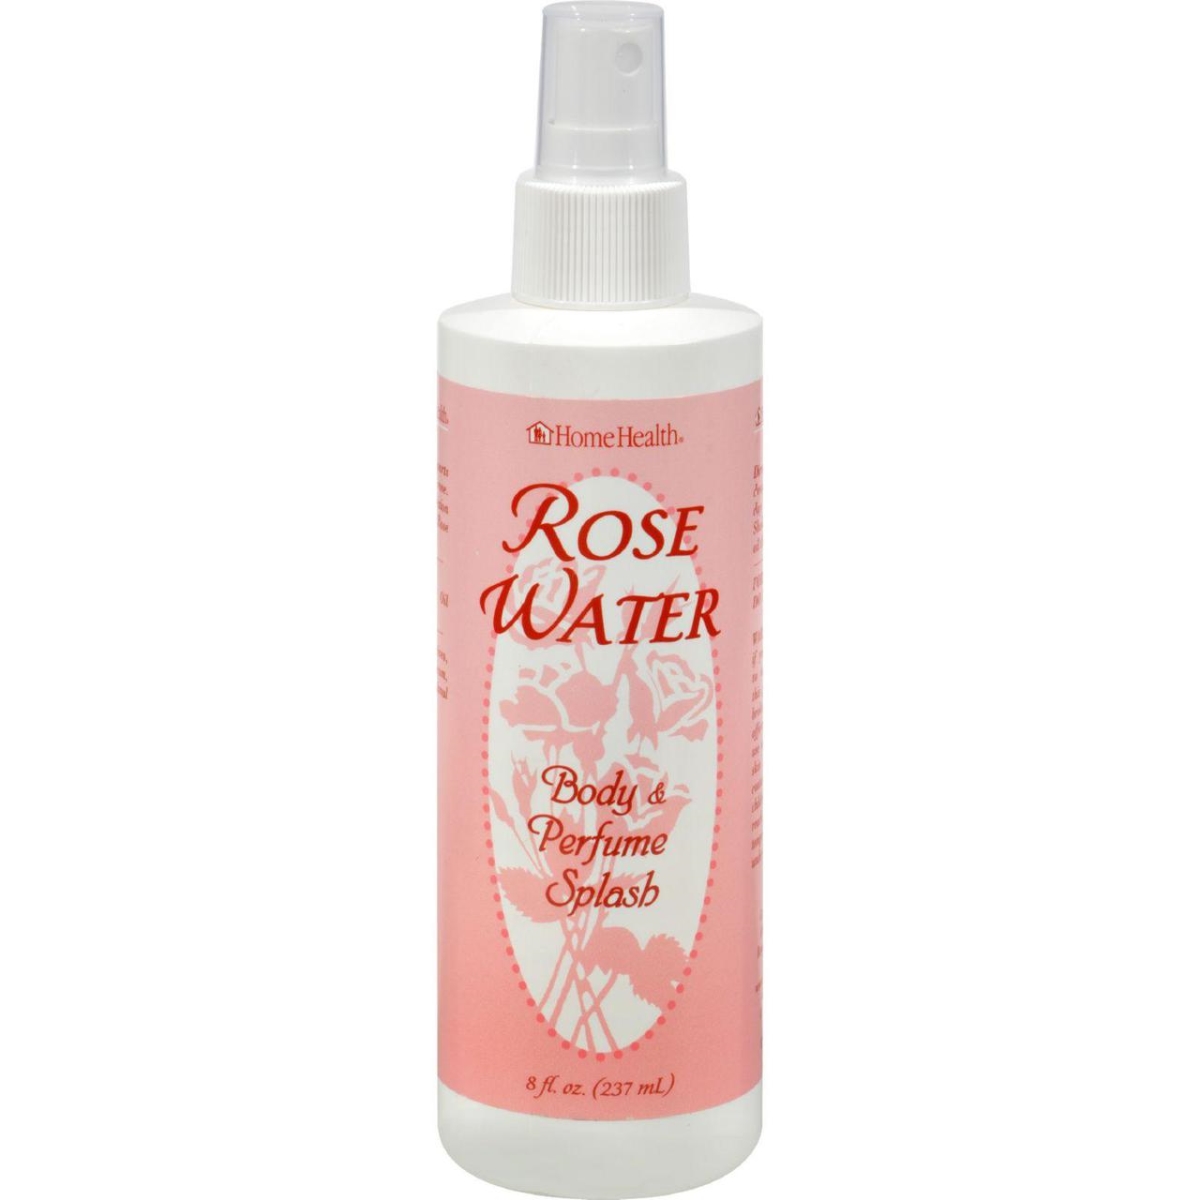 Hg1794536 6 Oz Body Mist - Rose Water